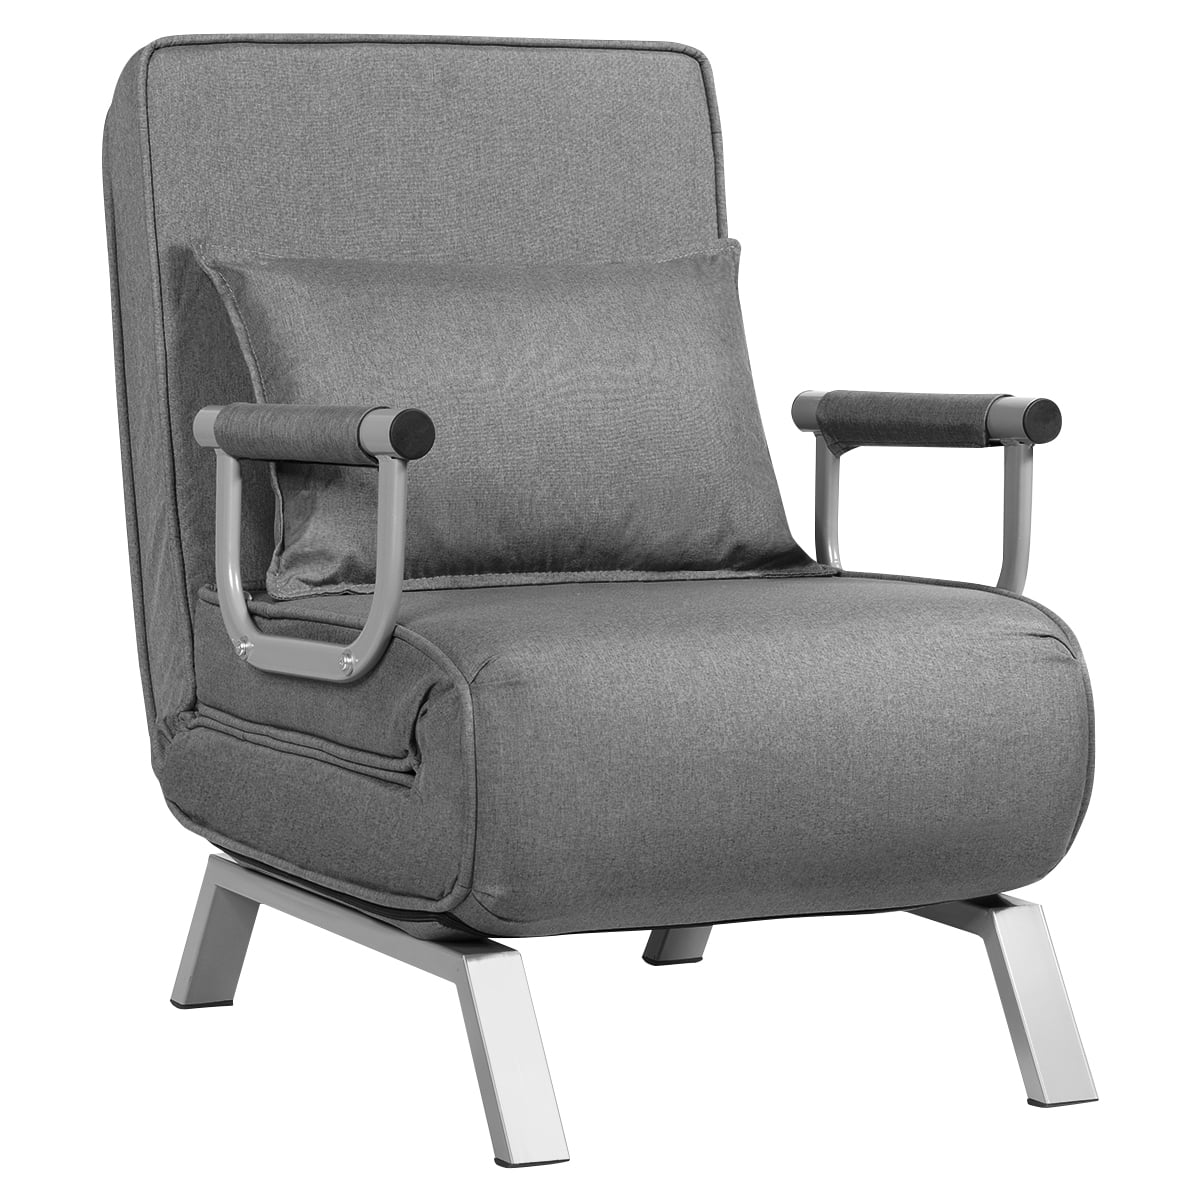 Gymax 5 Position Convertible Sofa Chair, Convertible Sofa Chair Bed Sleeper